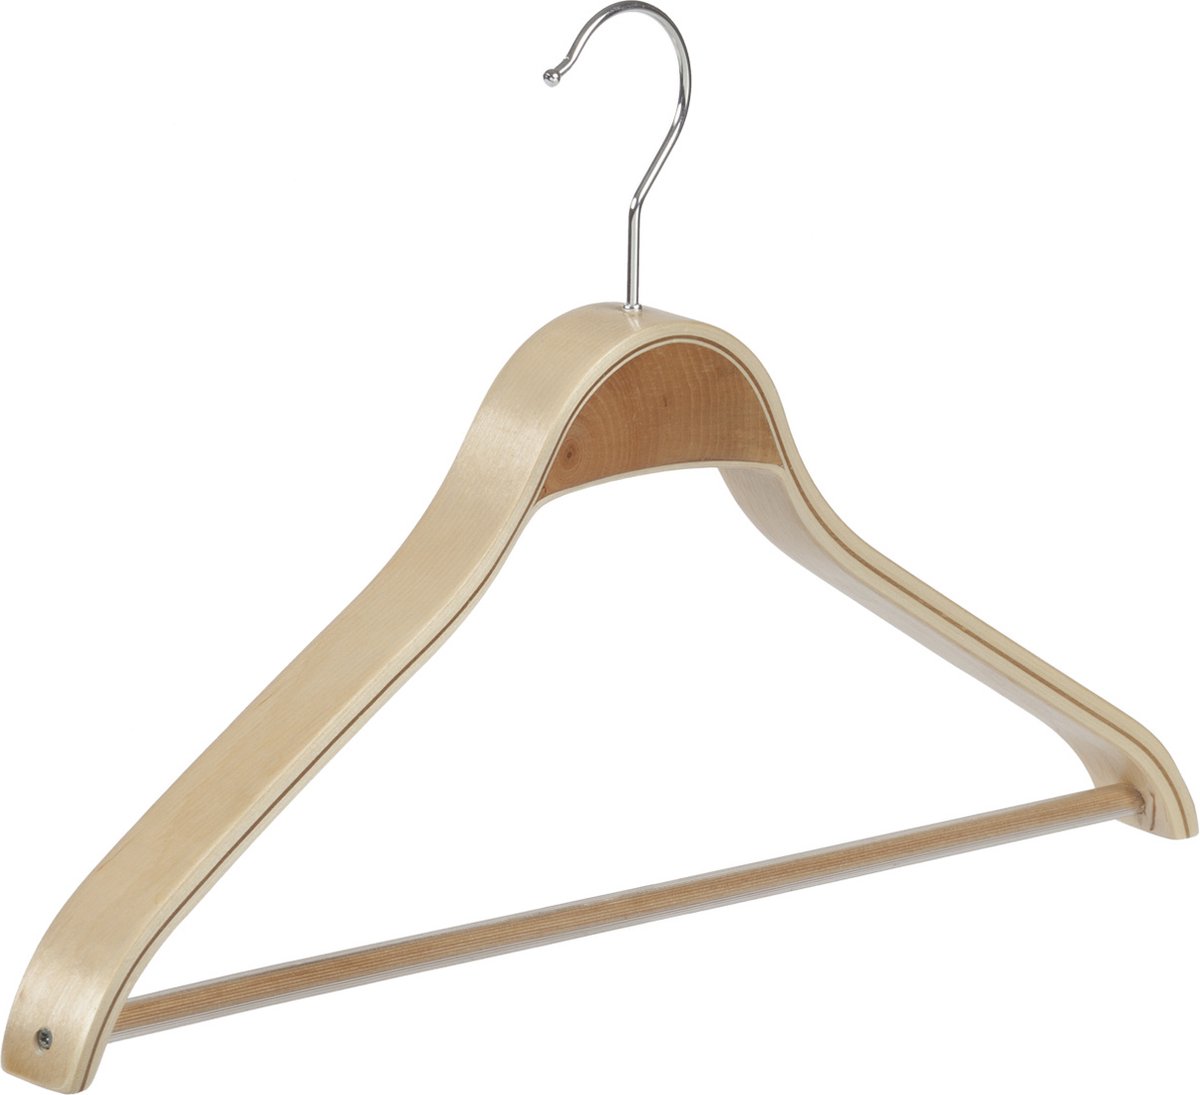 De Kledinghanger Gigant - 6 x Mantelhanger / kostuumhanger berkenhout naturel gelakt met schouderverbreding en anti-slip broeklat, 42 cm